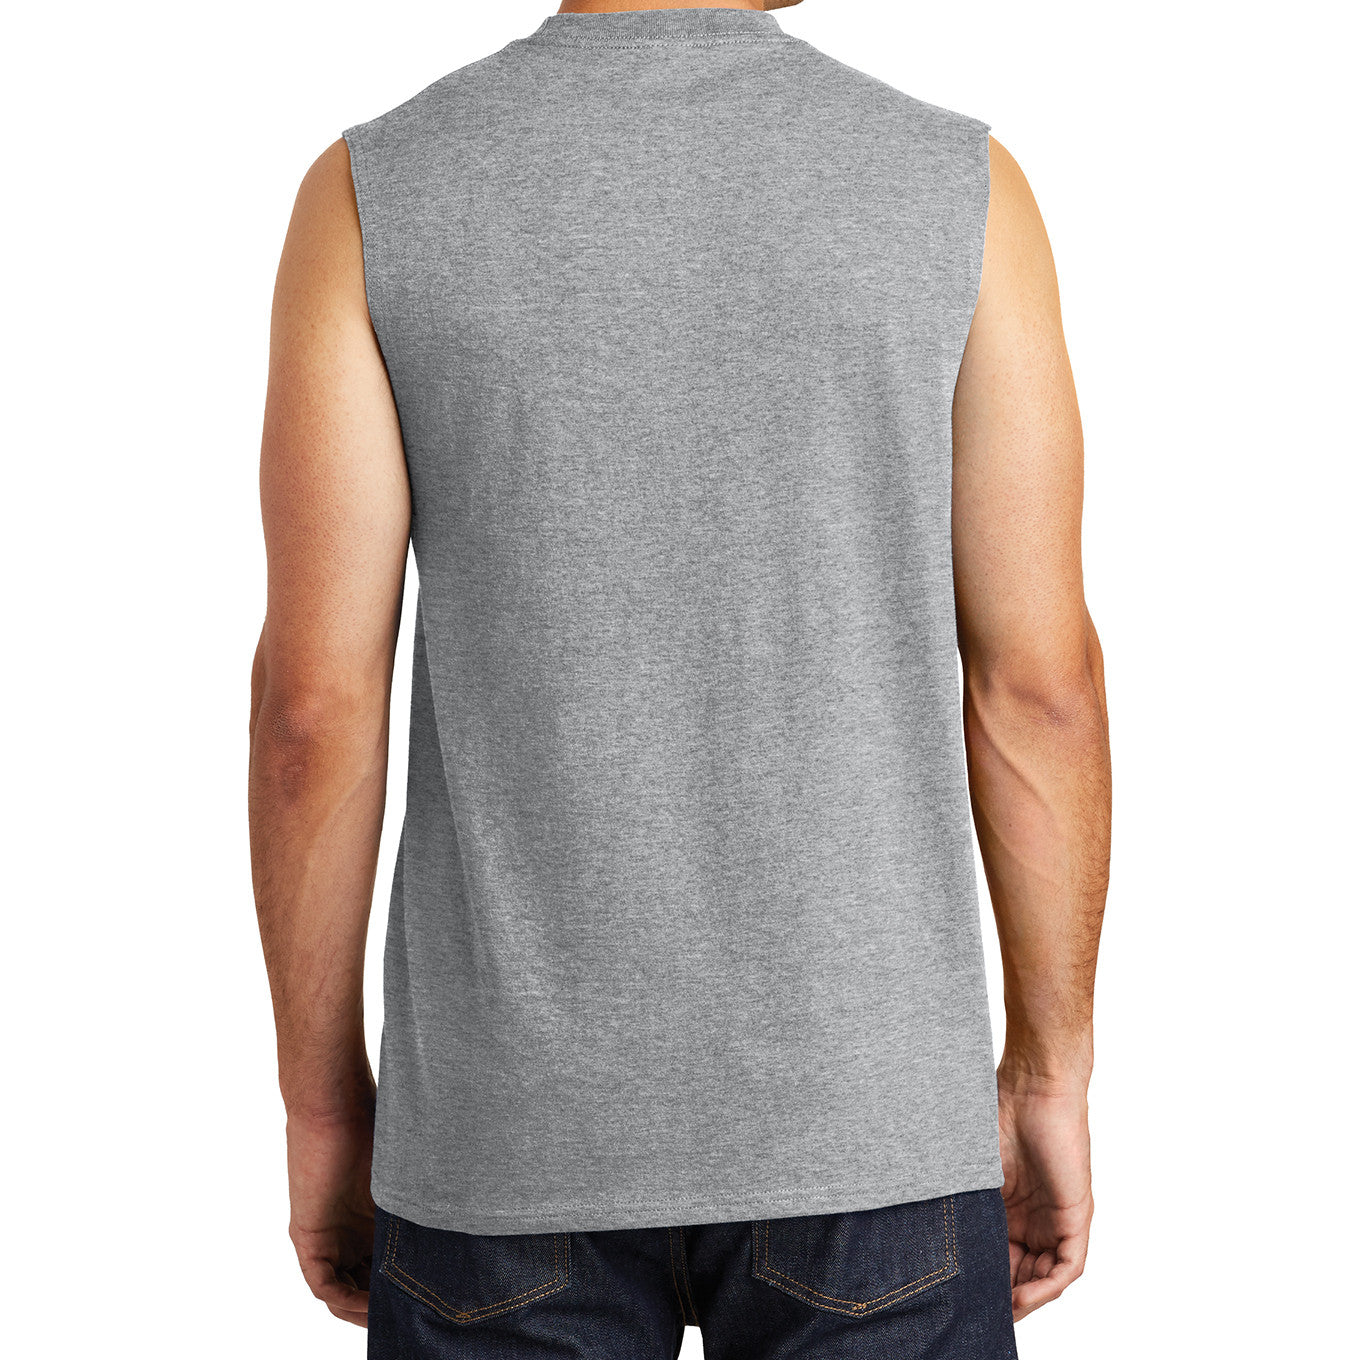 Mafoose Male Cotton Sleeveless Tee Men Athletic Shirts & Tops